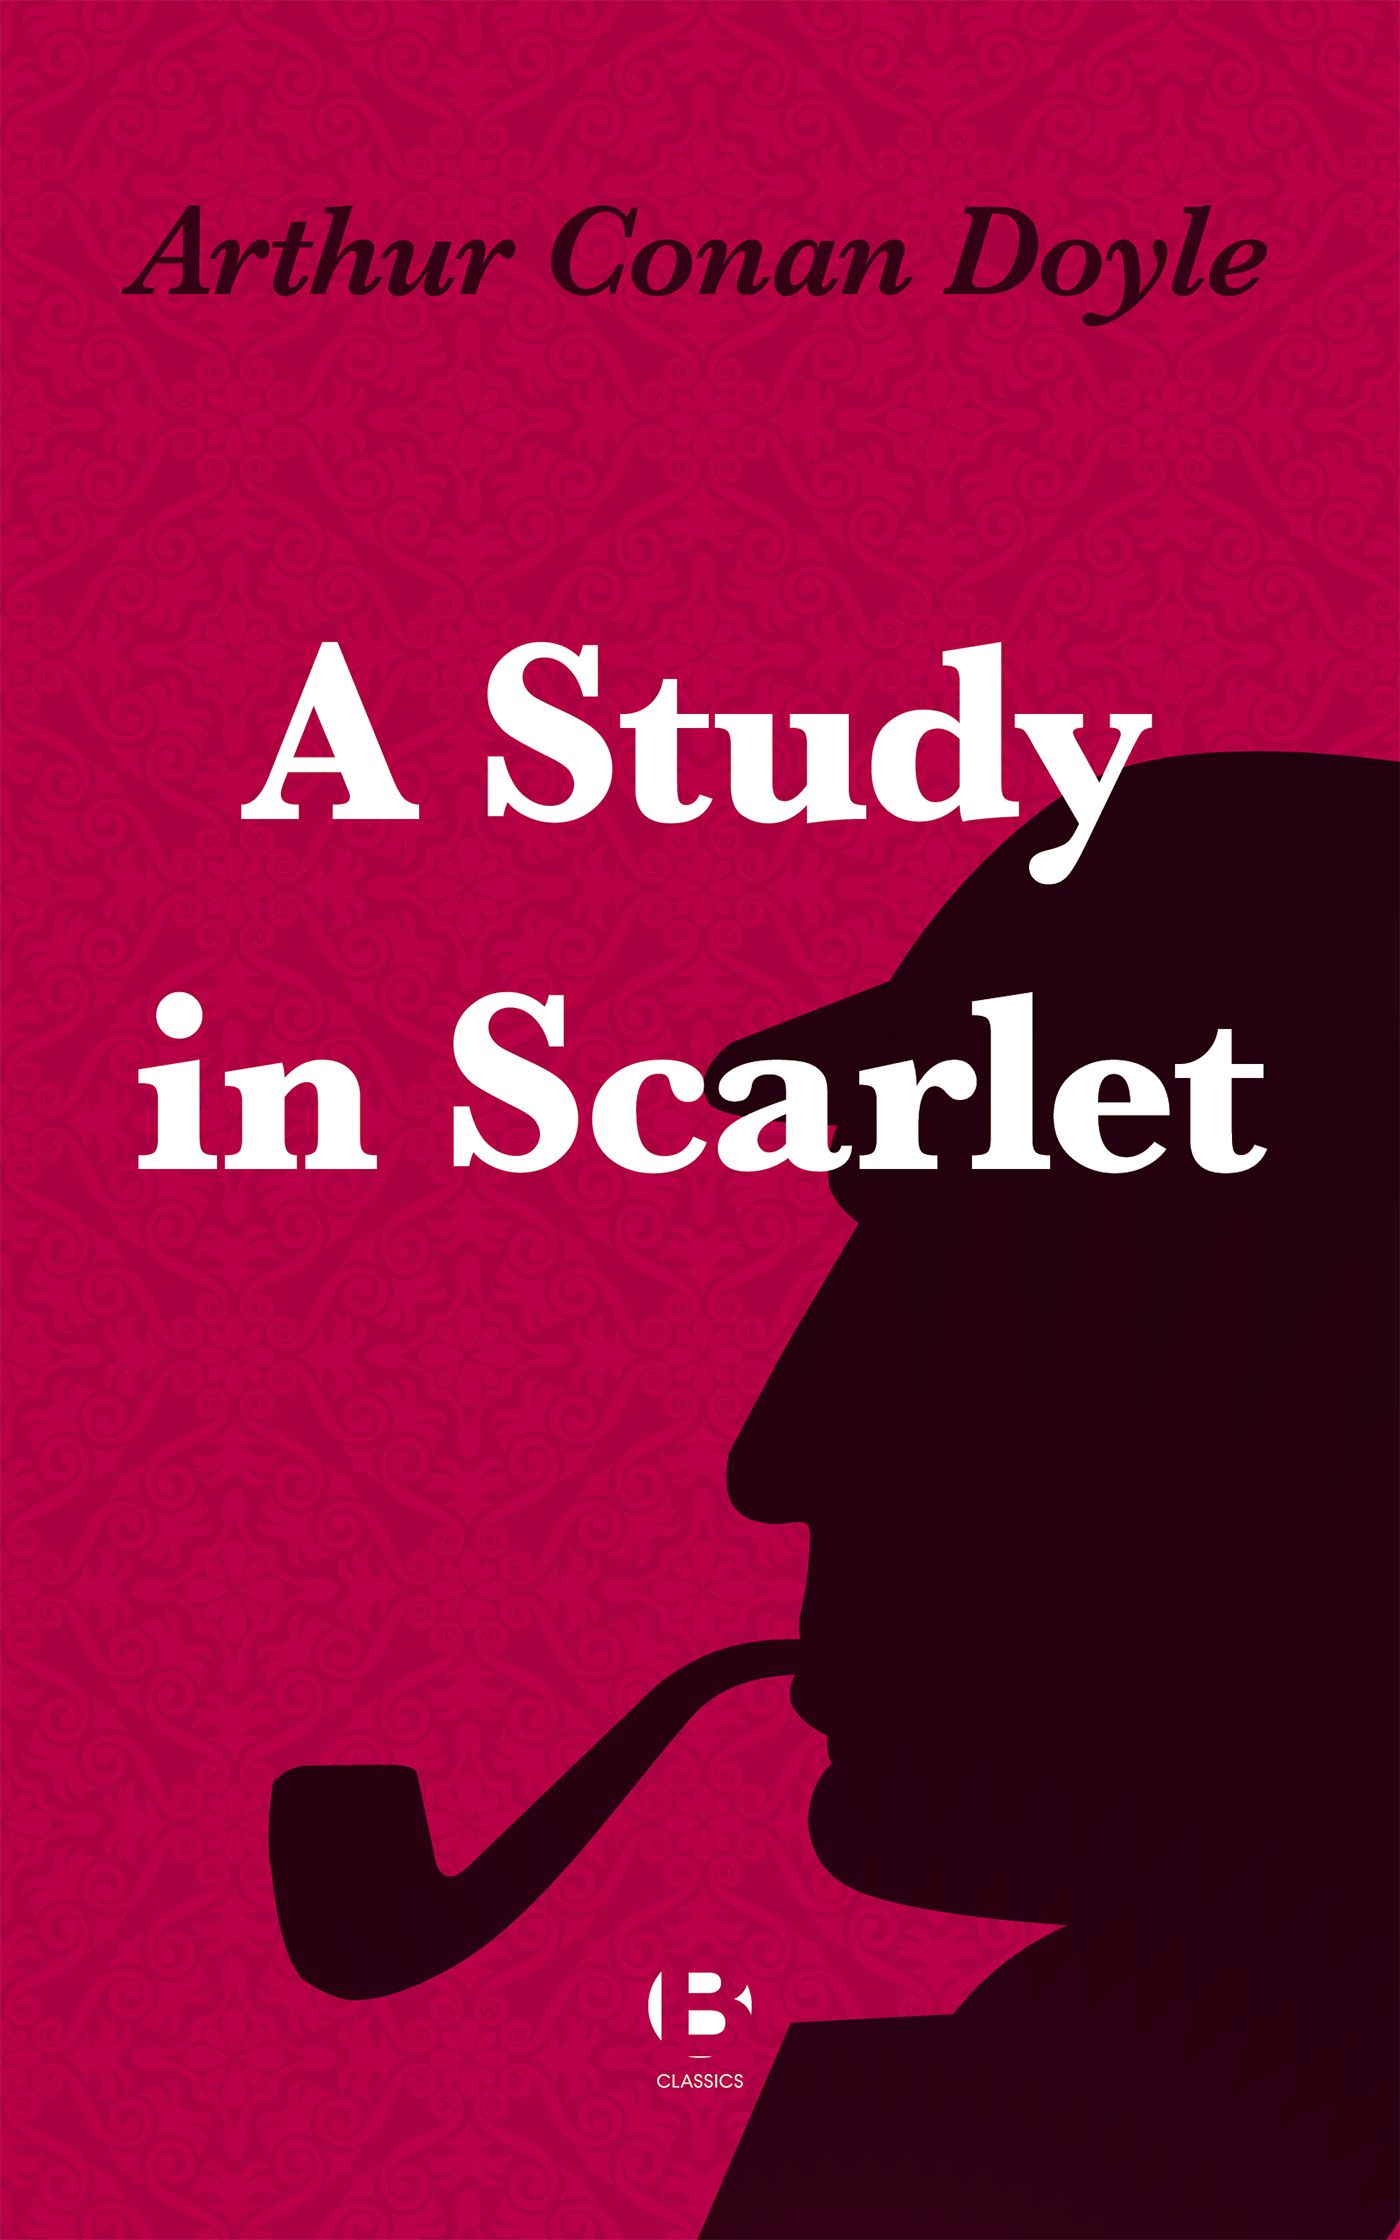 A Study in Scarlet, e-bog af Arthur Conan Doyle